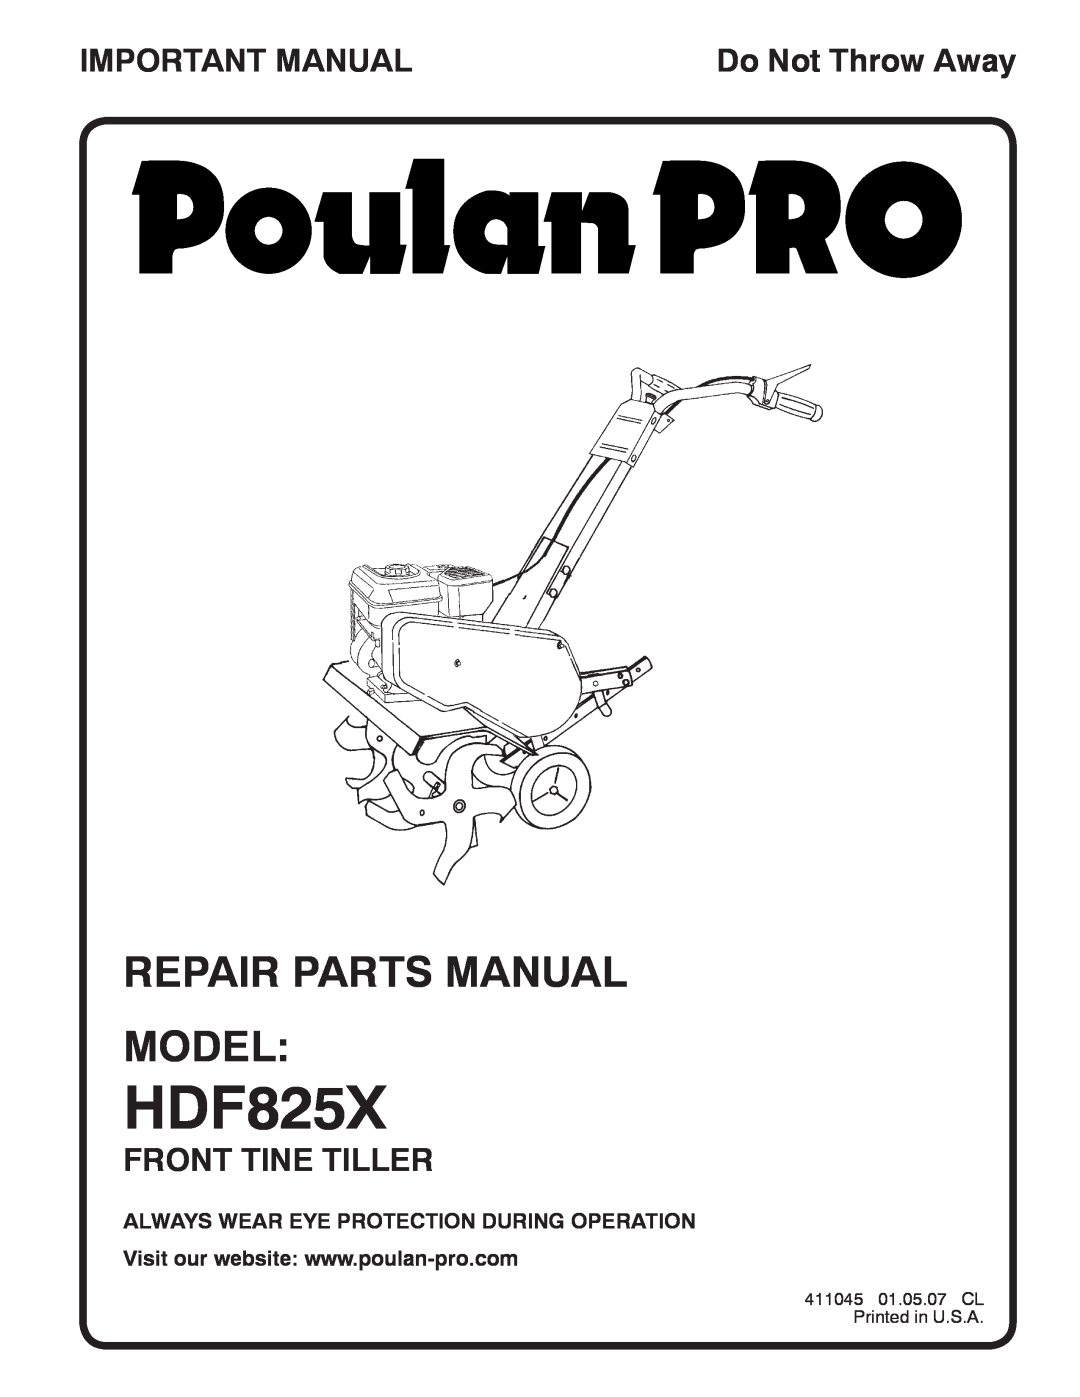 Poulan 411045 manual Repair Parts Manual Model, HDF825X, Important Manual, Front Tine Tiller, Do Not Throw Away 